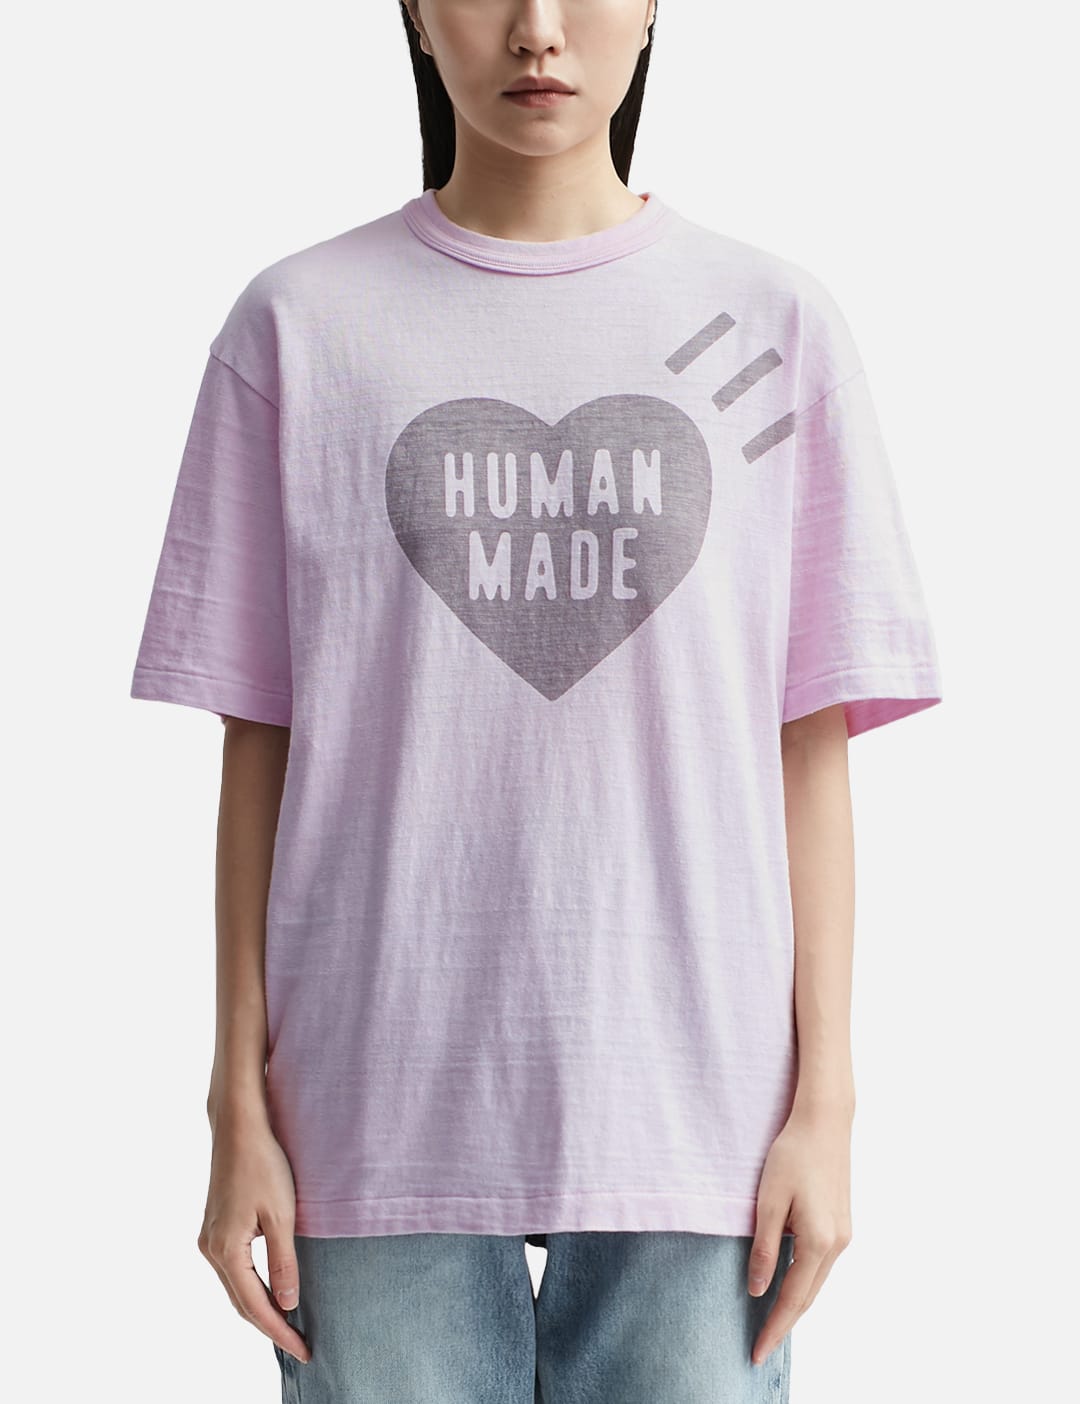 Human Made - COLOR T-SHIRT #1 | HBX - HYPEBEAST 為您搜羅全球潮流 